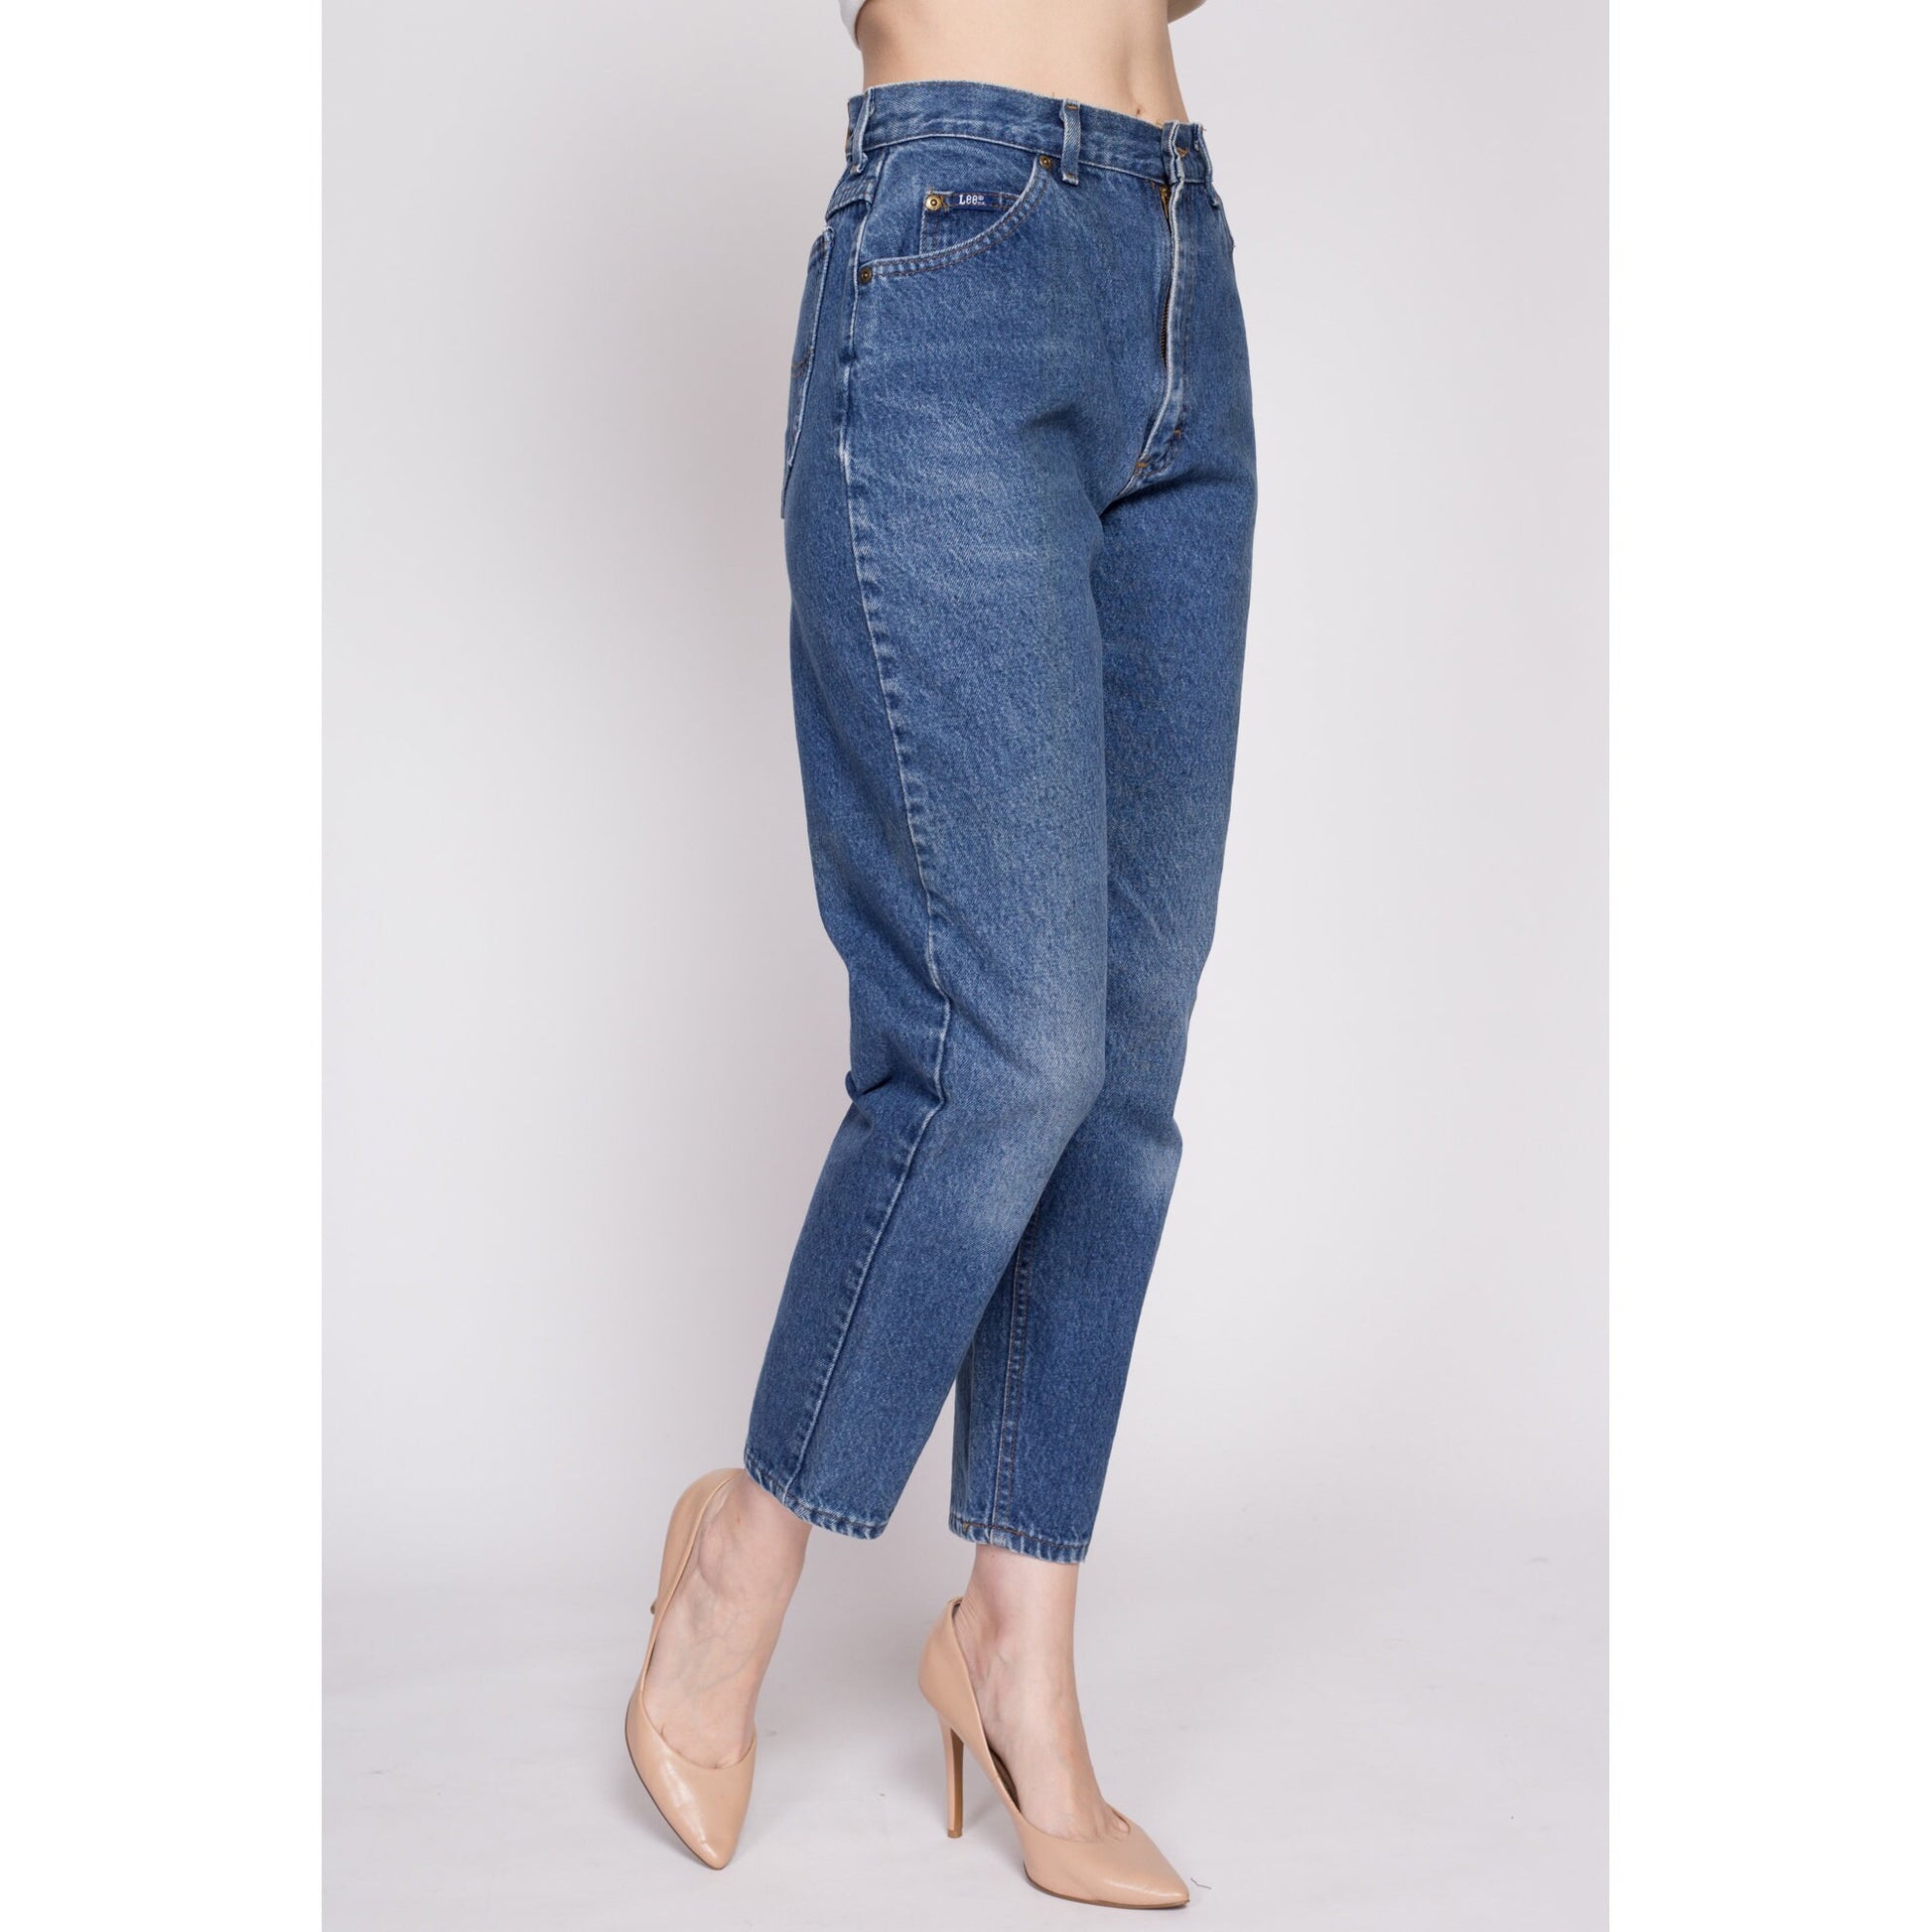 80s Lee Riders High Waisted Jeans - Small to Petite Medium, 27" | Vintage Medium Wash Denim Tapered Leg Mom Jeans